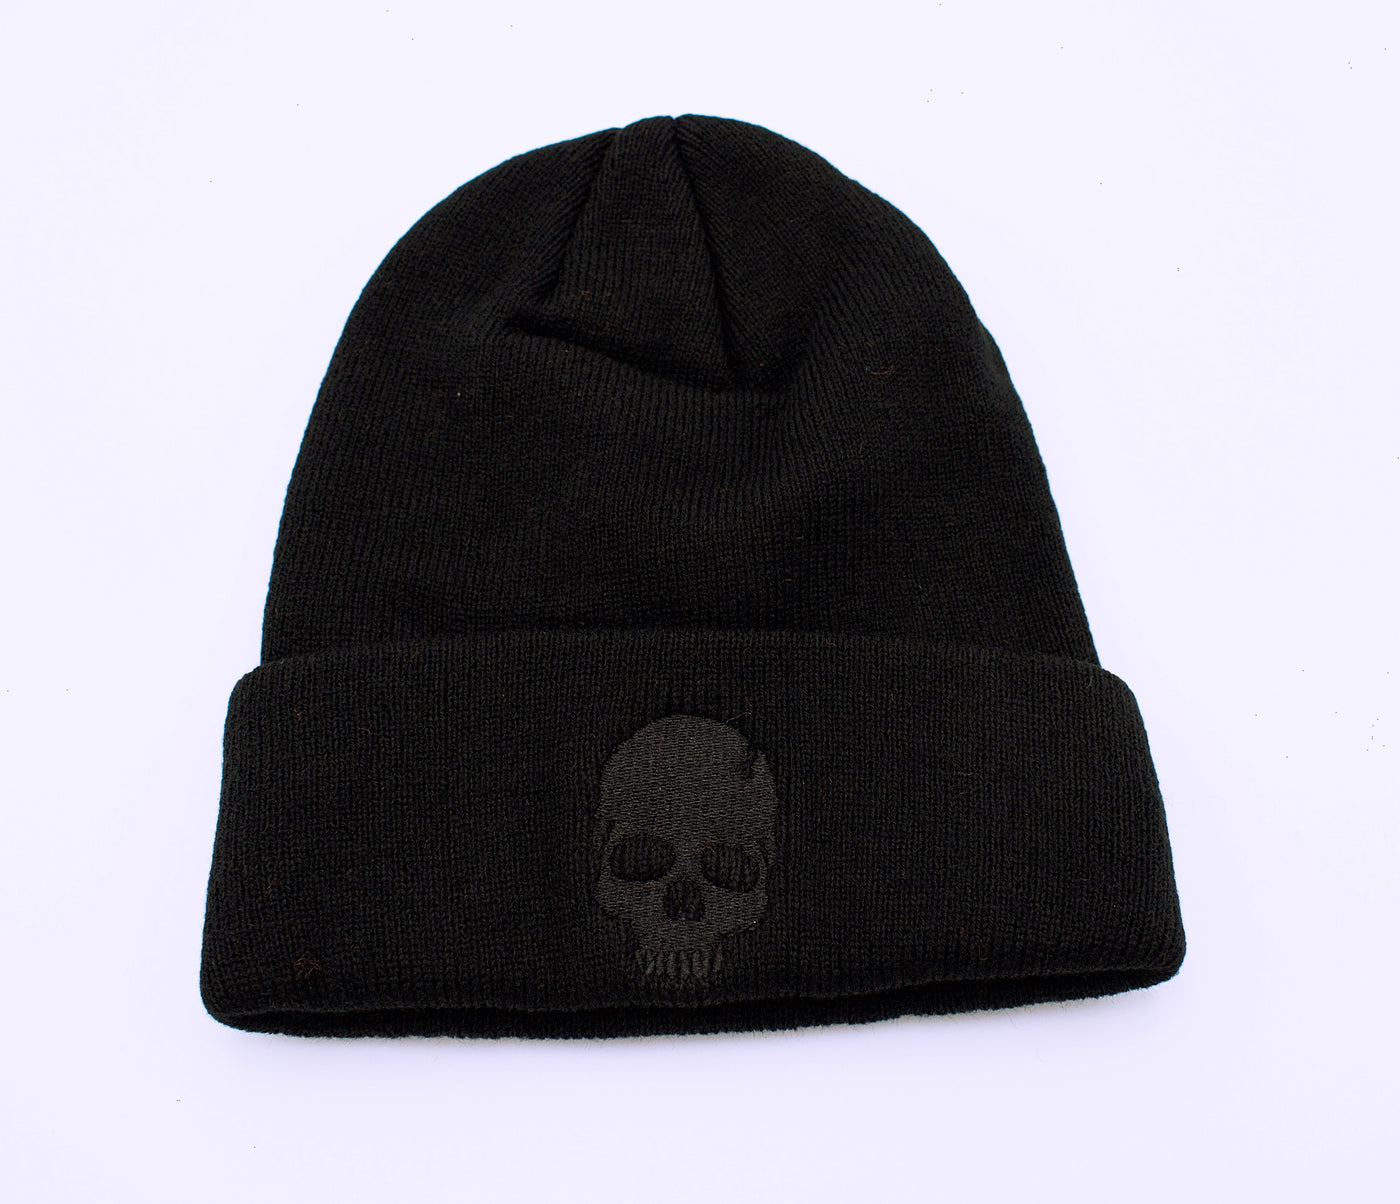 Skull Winter Hat - The Cranio Collections